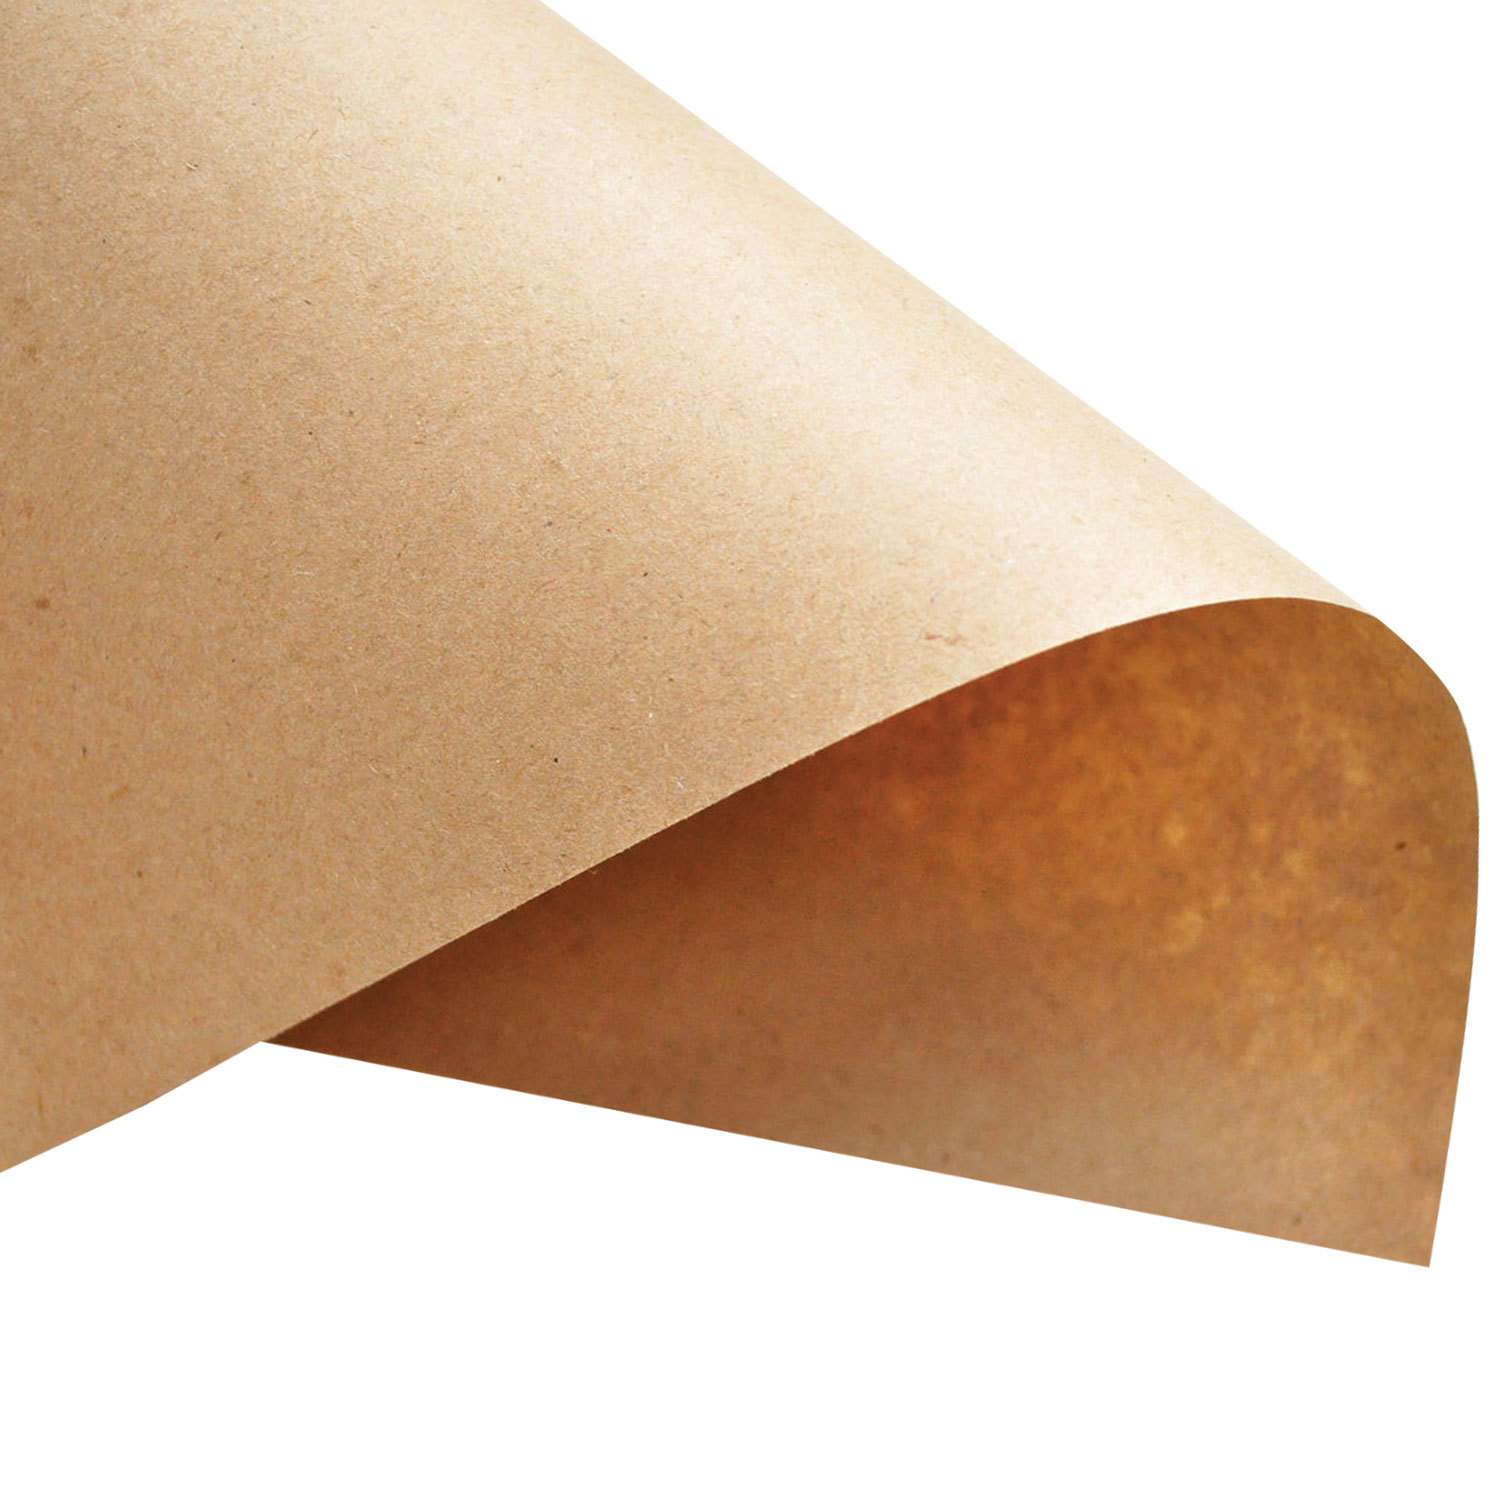 Крафт-бумага Brauberg в рулоне упаковочная 840 мм x 40 м плотность 78 г/м2 Марка А - фото 6